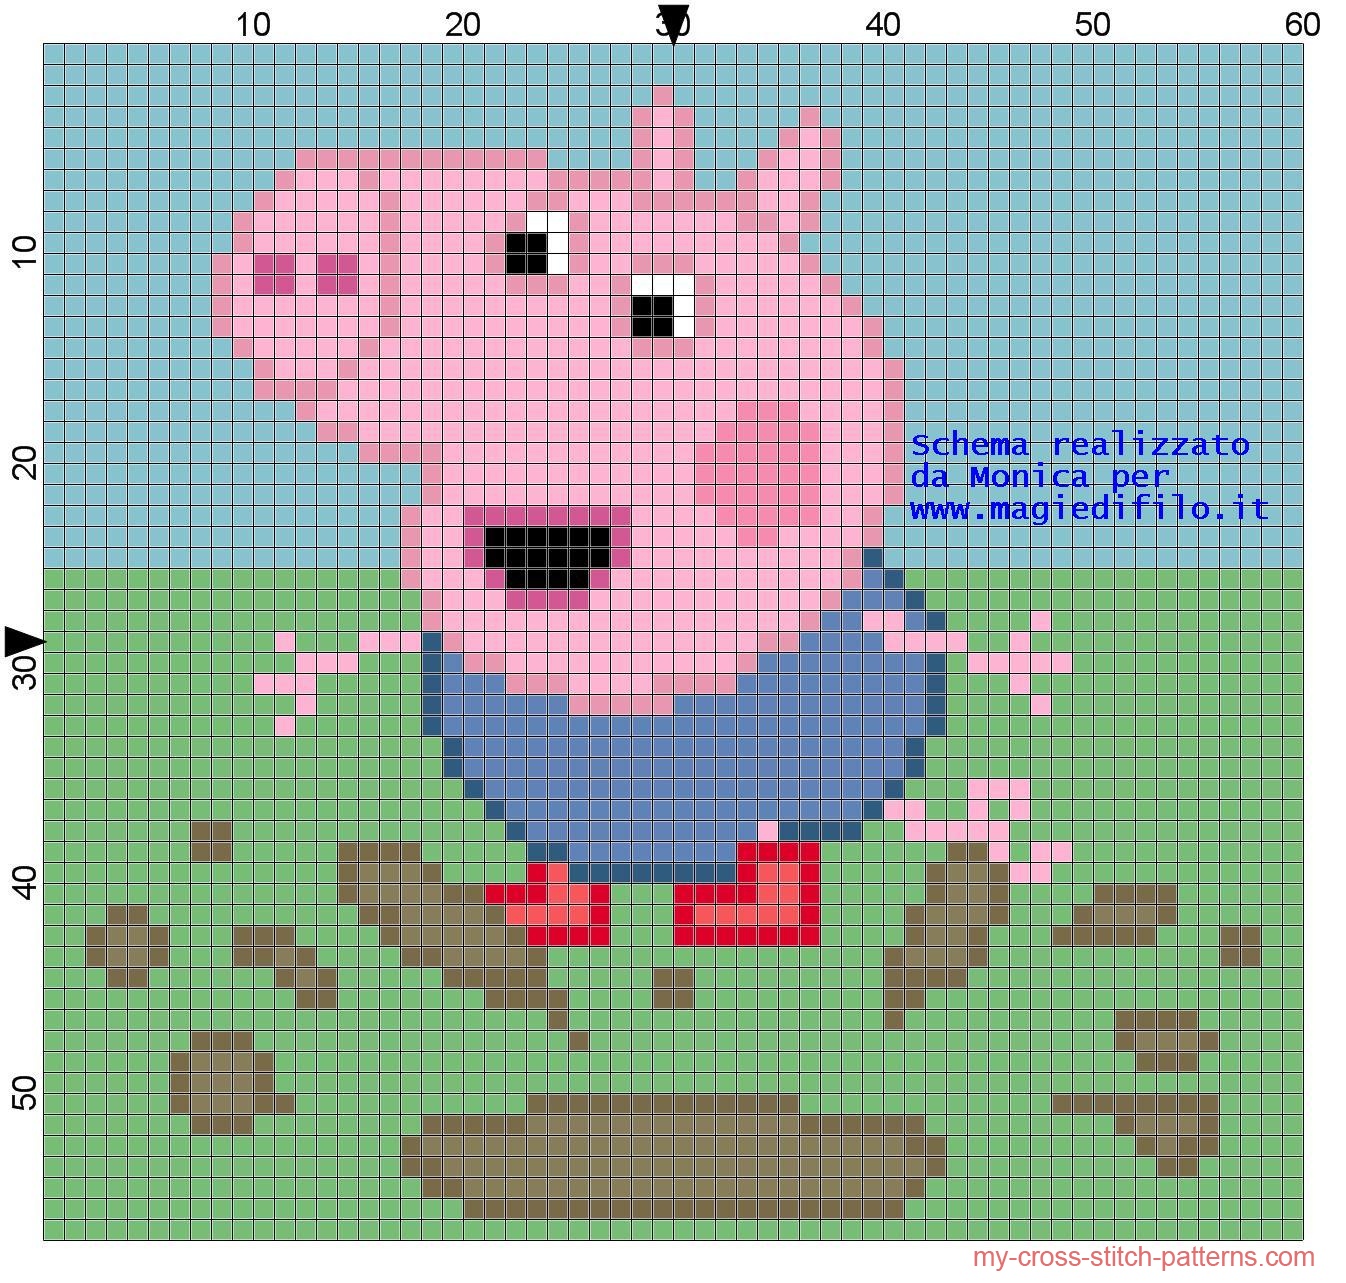 george_pig_on_the_mud_cross_stitch_pattern